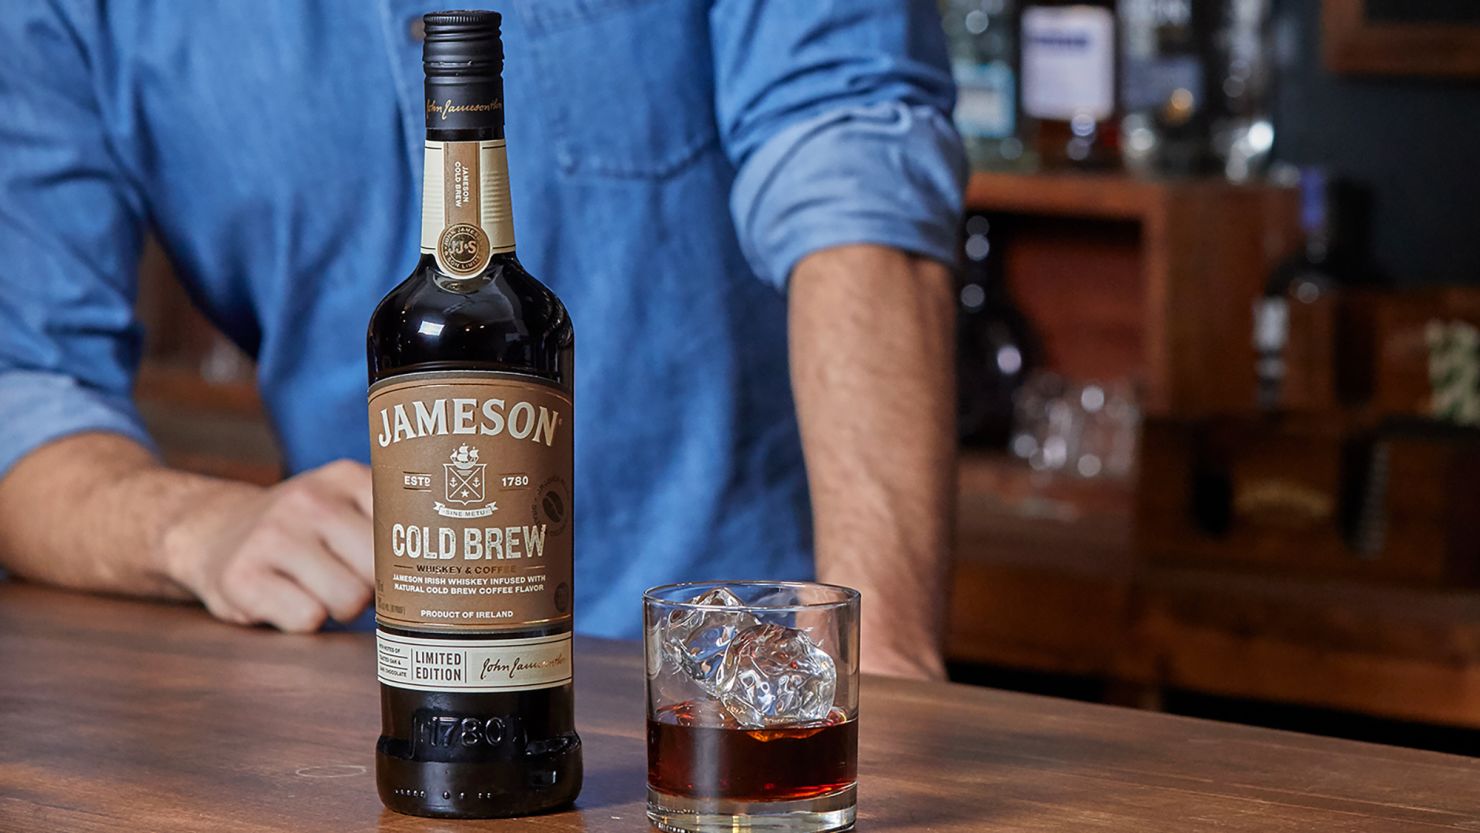 Jameson - Cold Brew Whiskey & Coffee - World Beverage